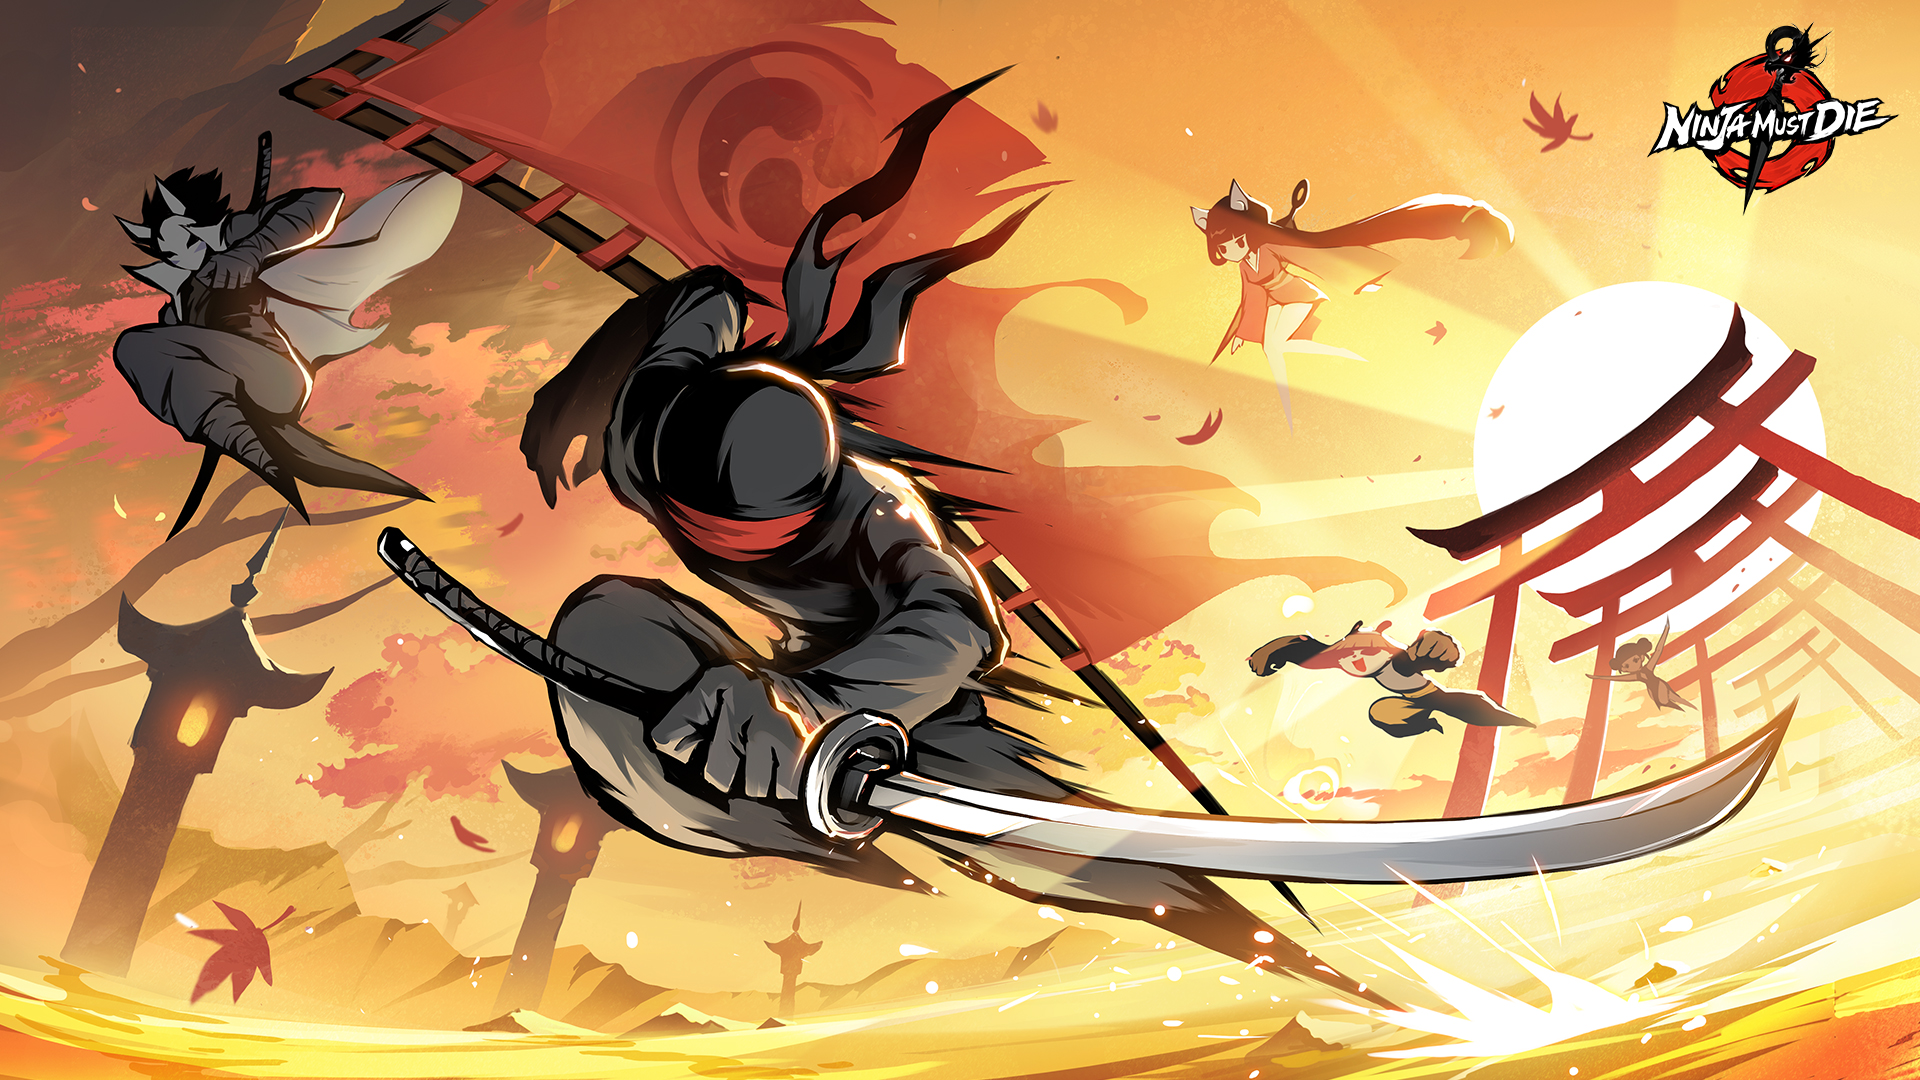 معرفی بازی موبایلی Ninja Must Die؛ پیش به سوی نبرد با شیاطین